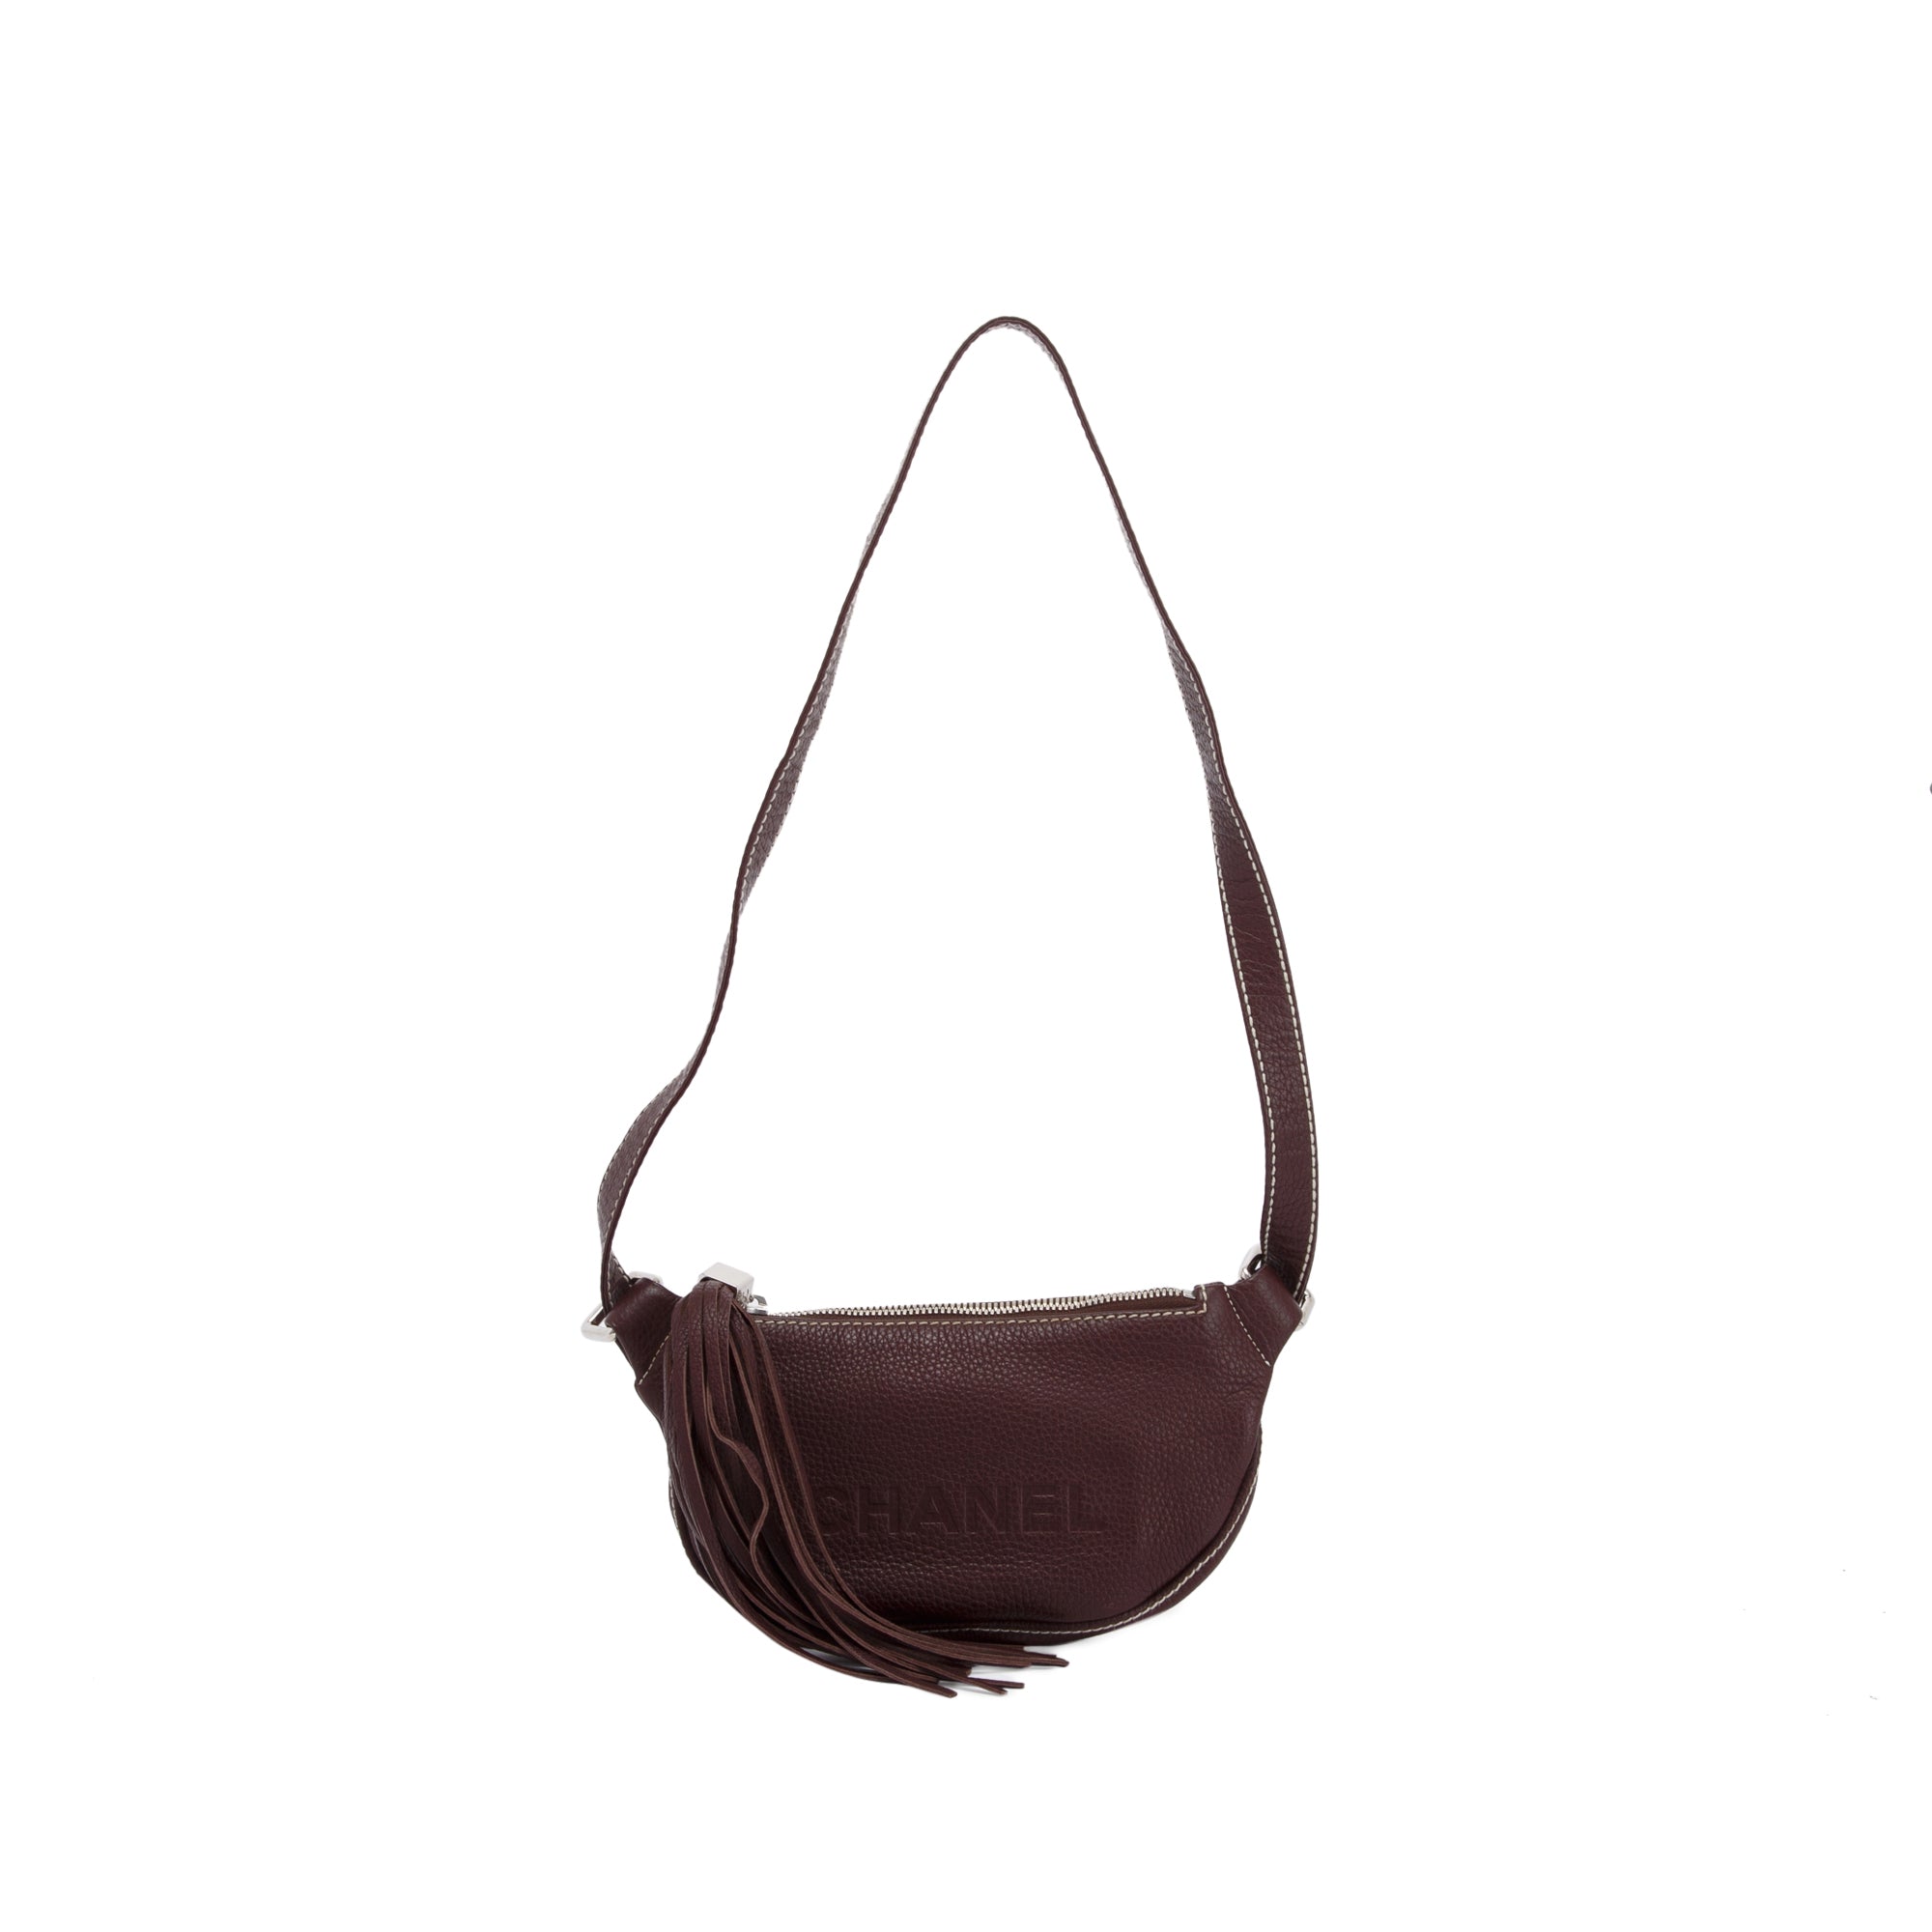 Chanel LAX Tassel Crossbody Bag